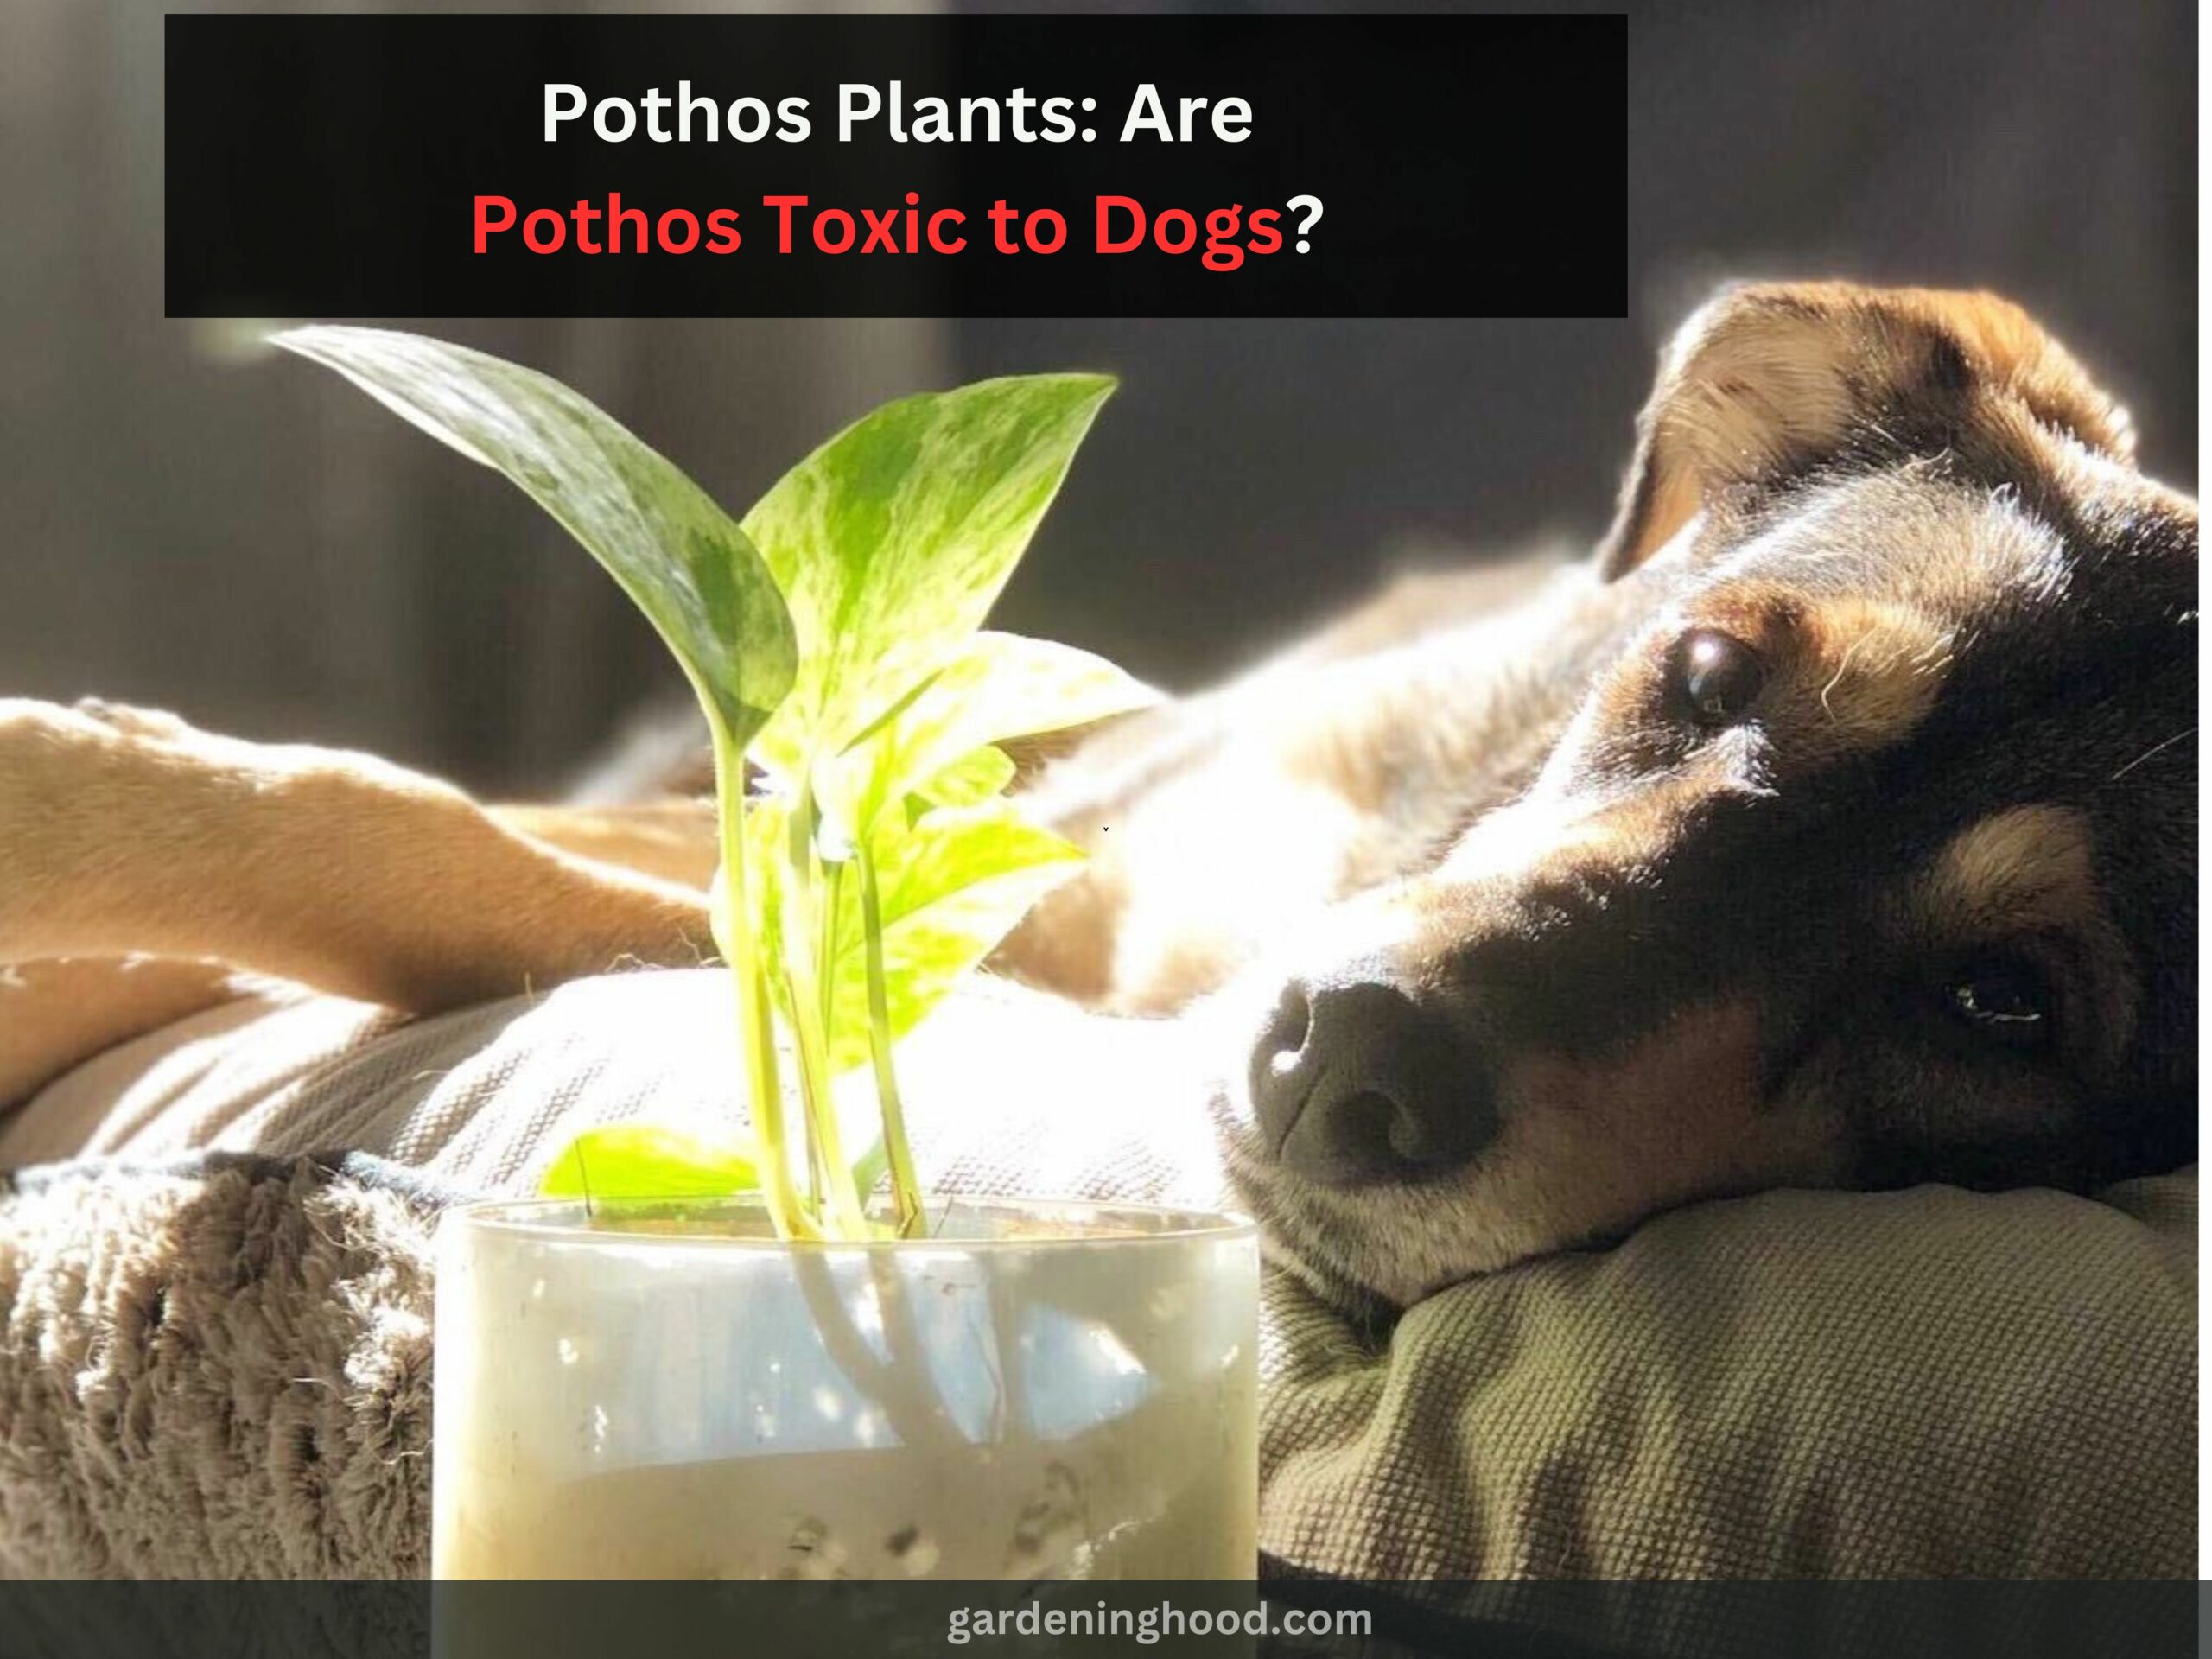 Pothos Plants: Are Pothos Toxic to Dogs?